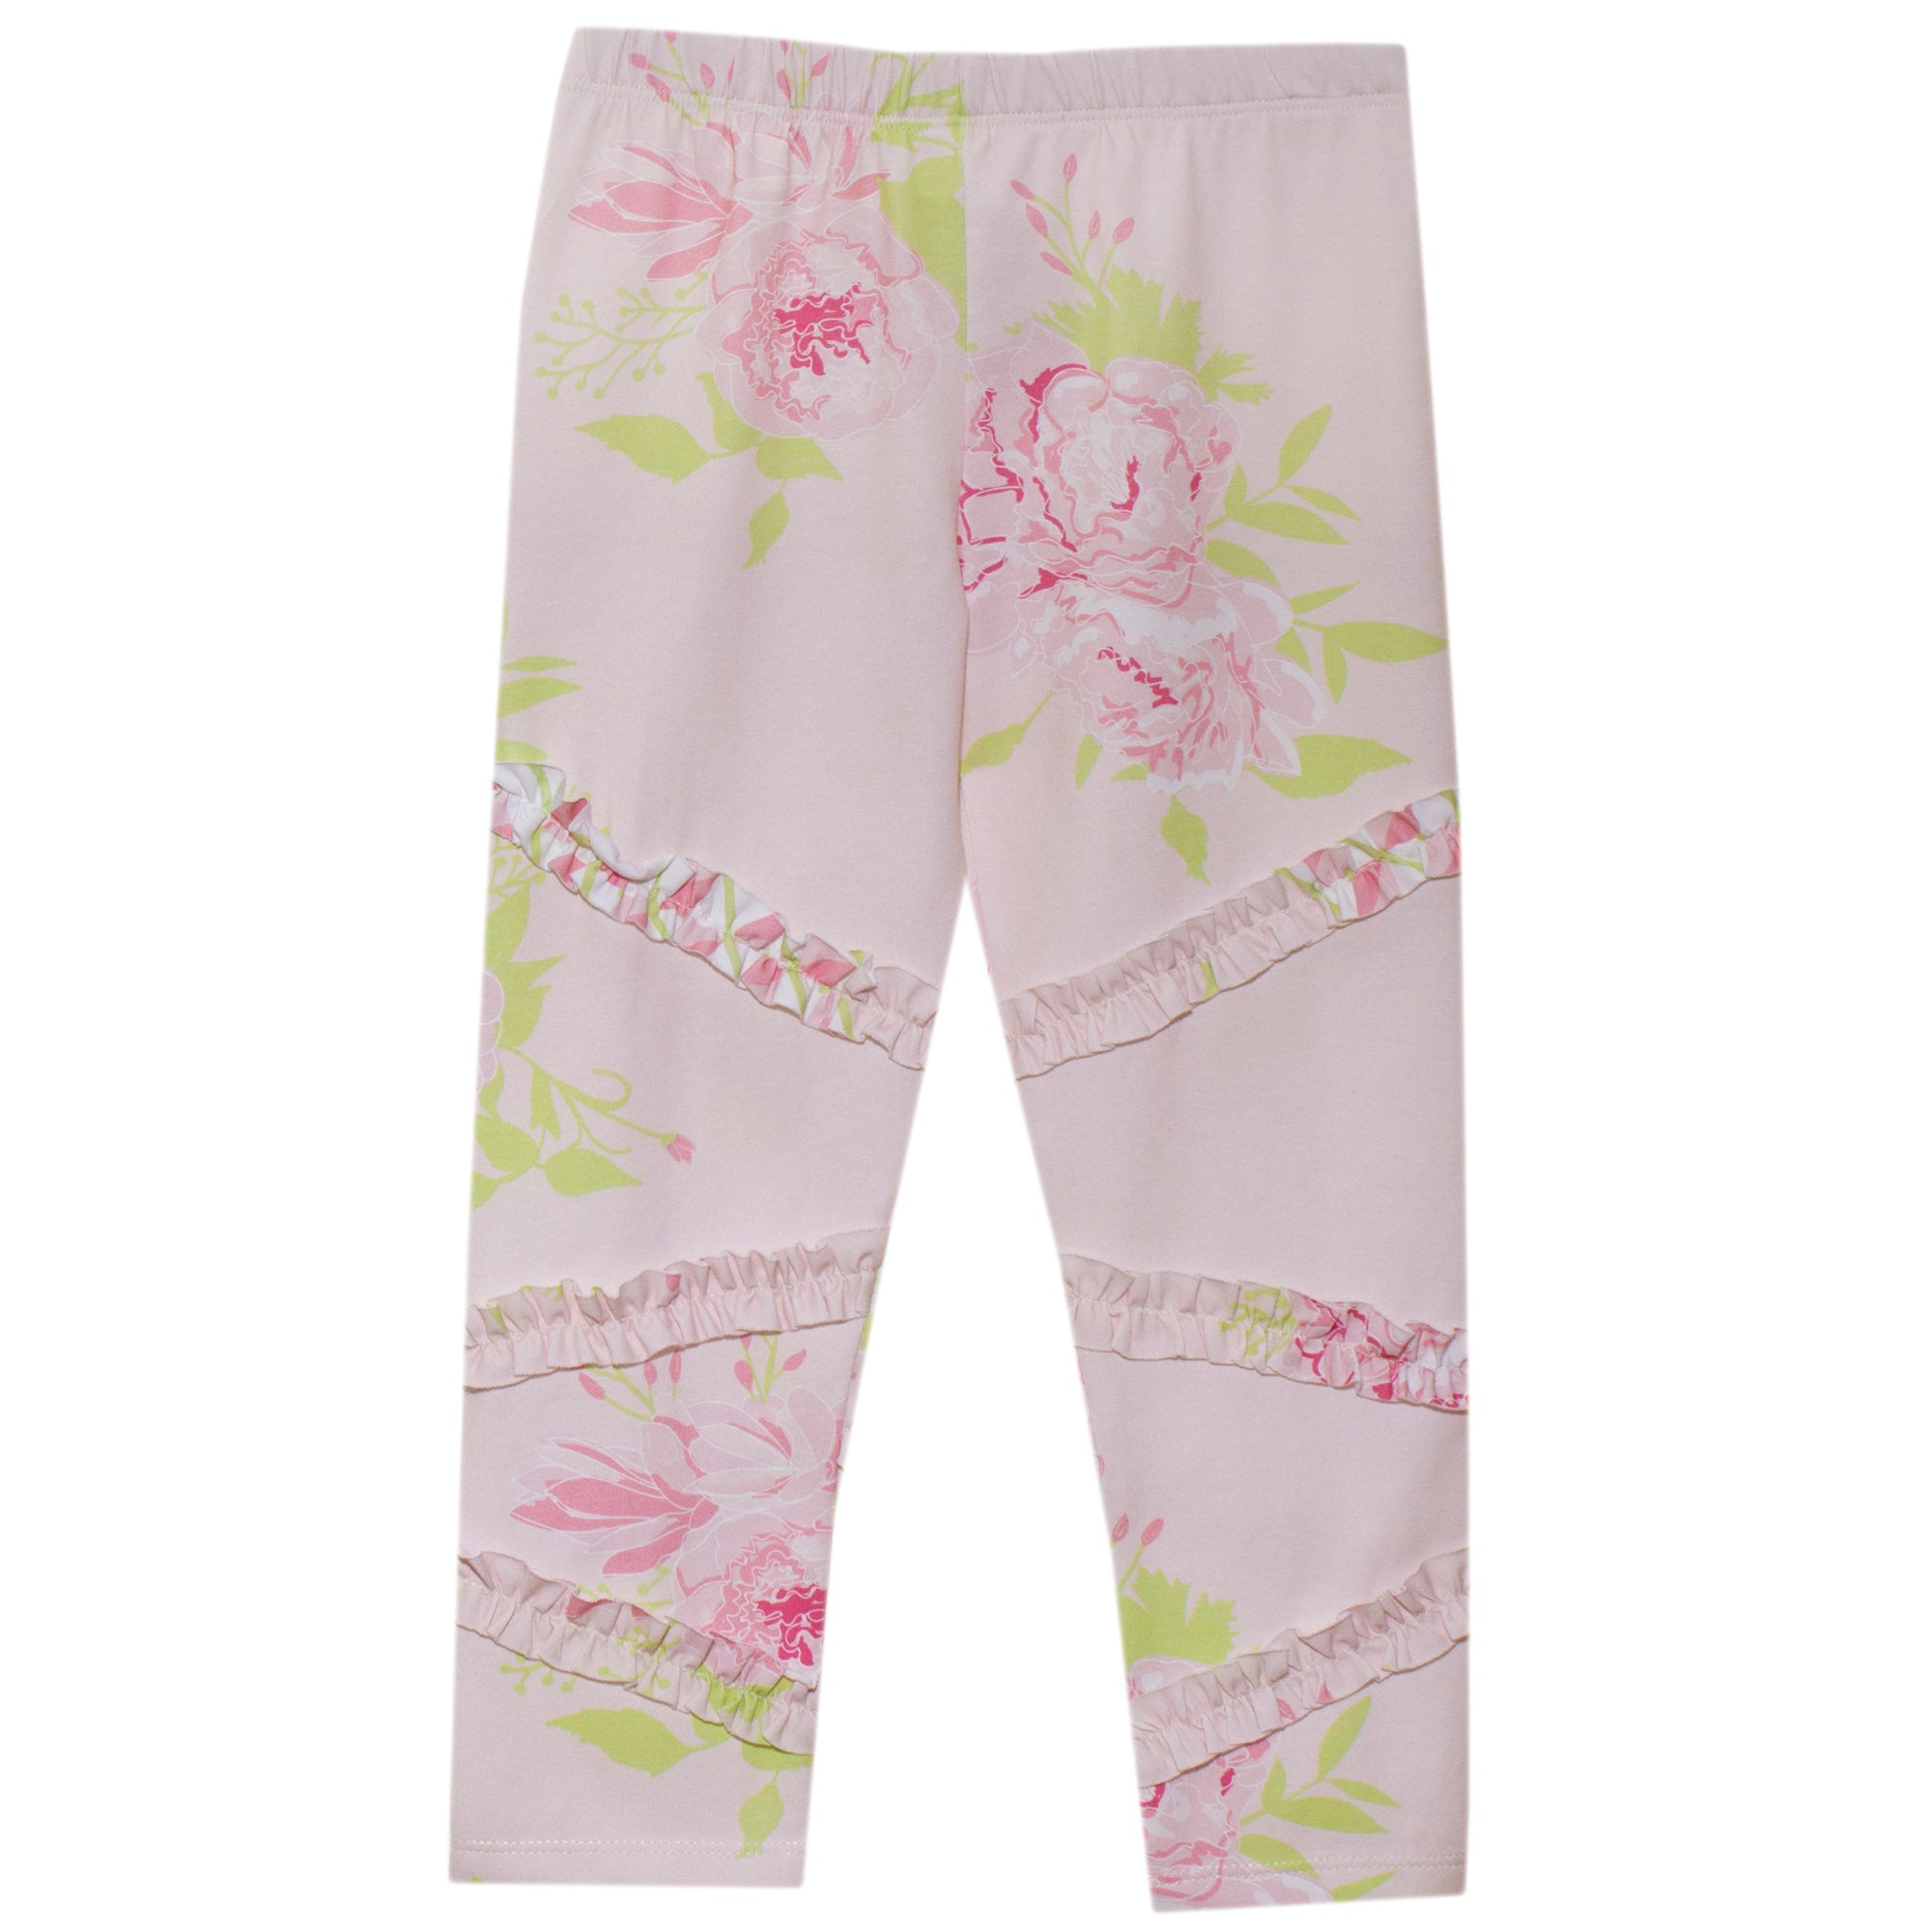 Patachou girls pink floral legging with ruffle detail